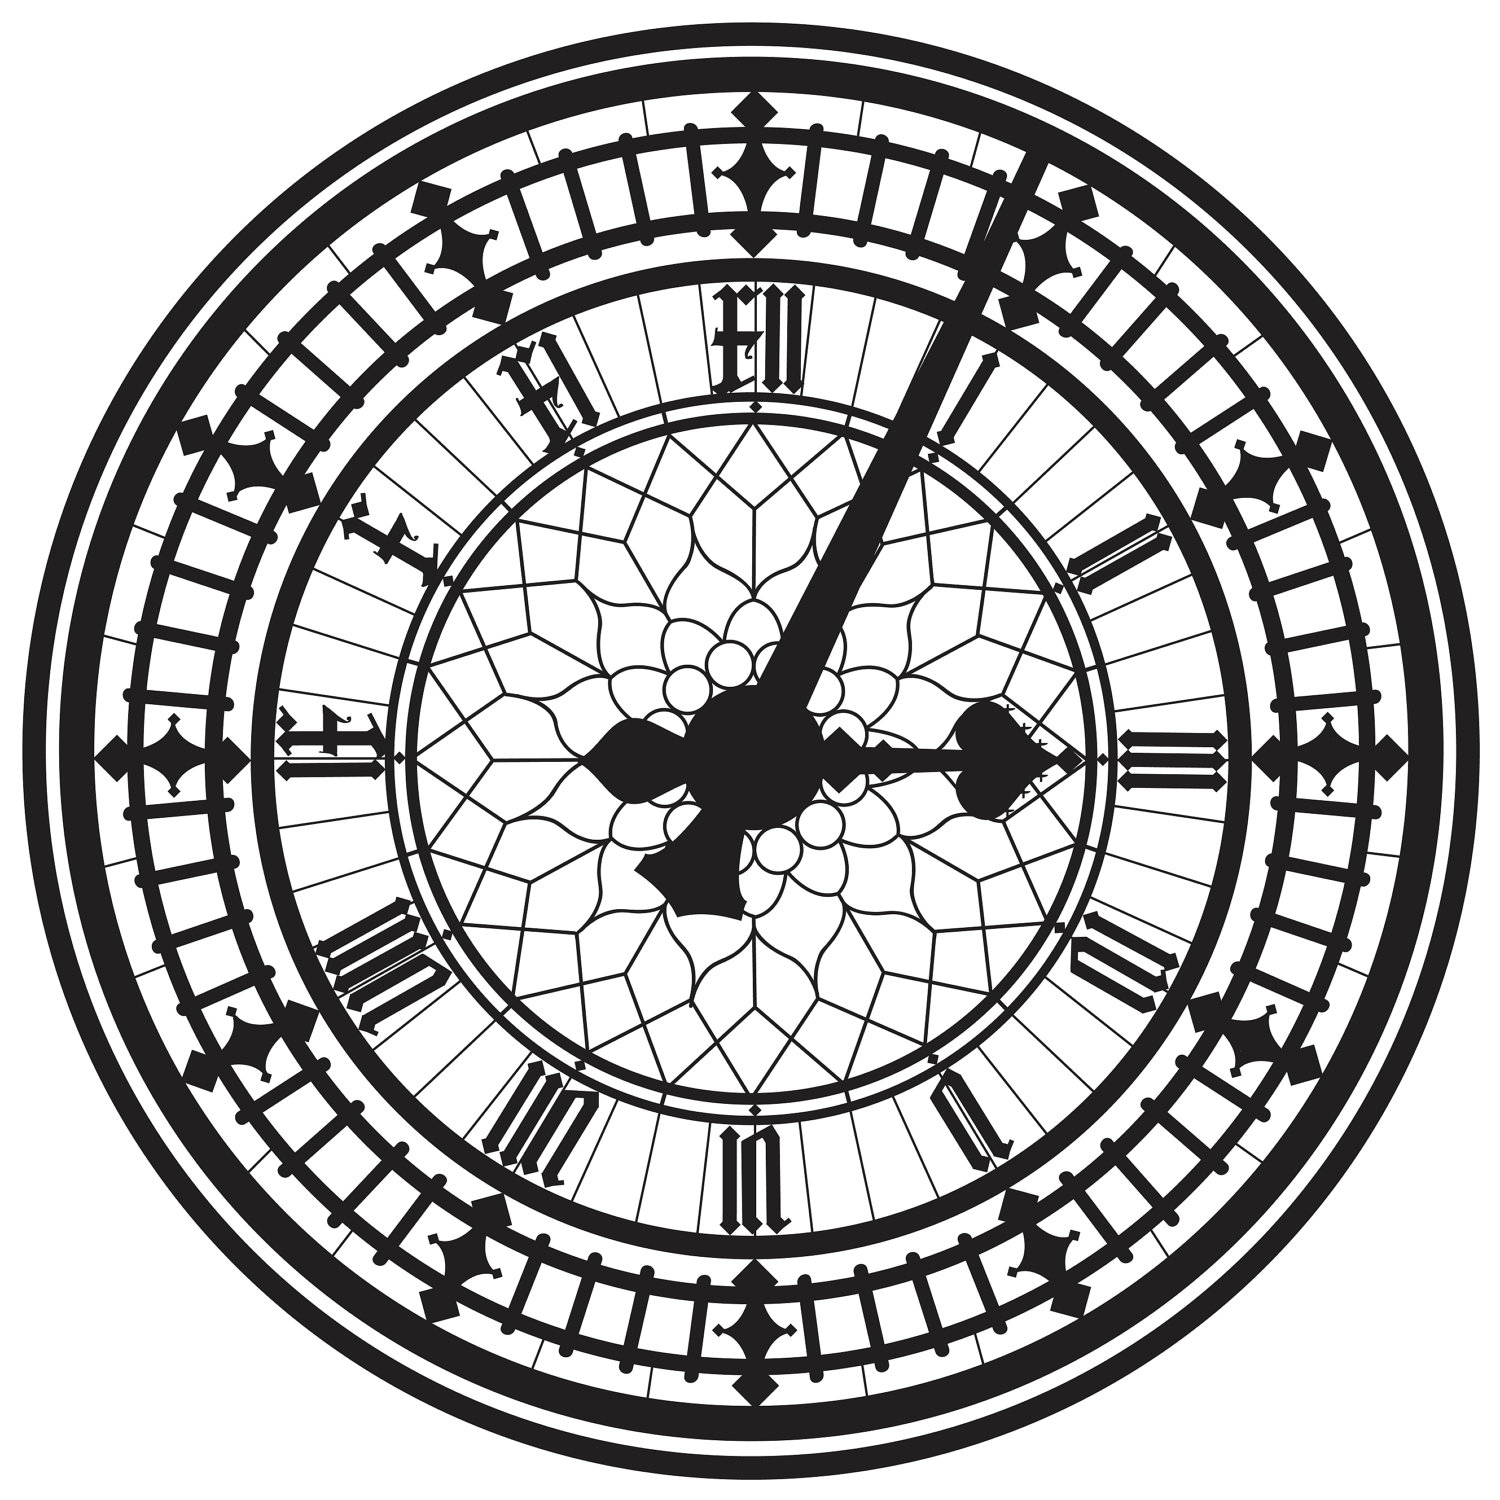 London Big Ben Clock Faces